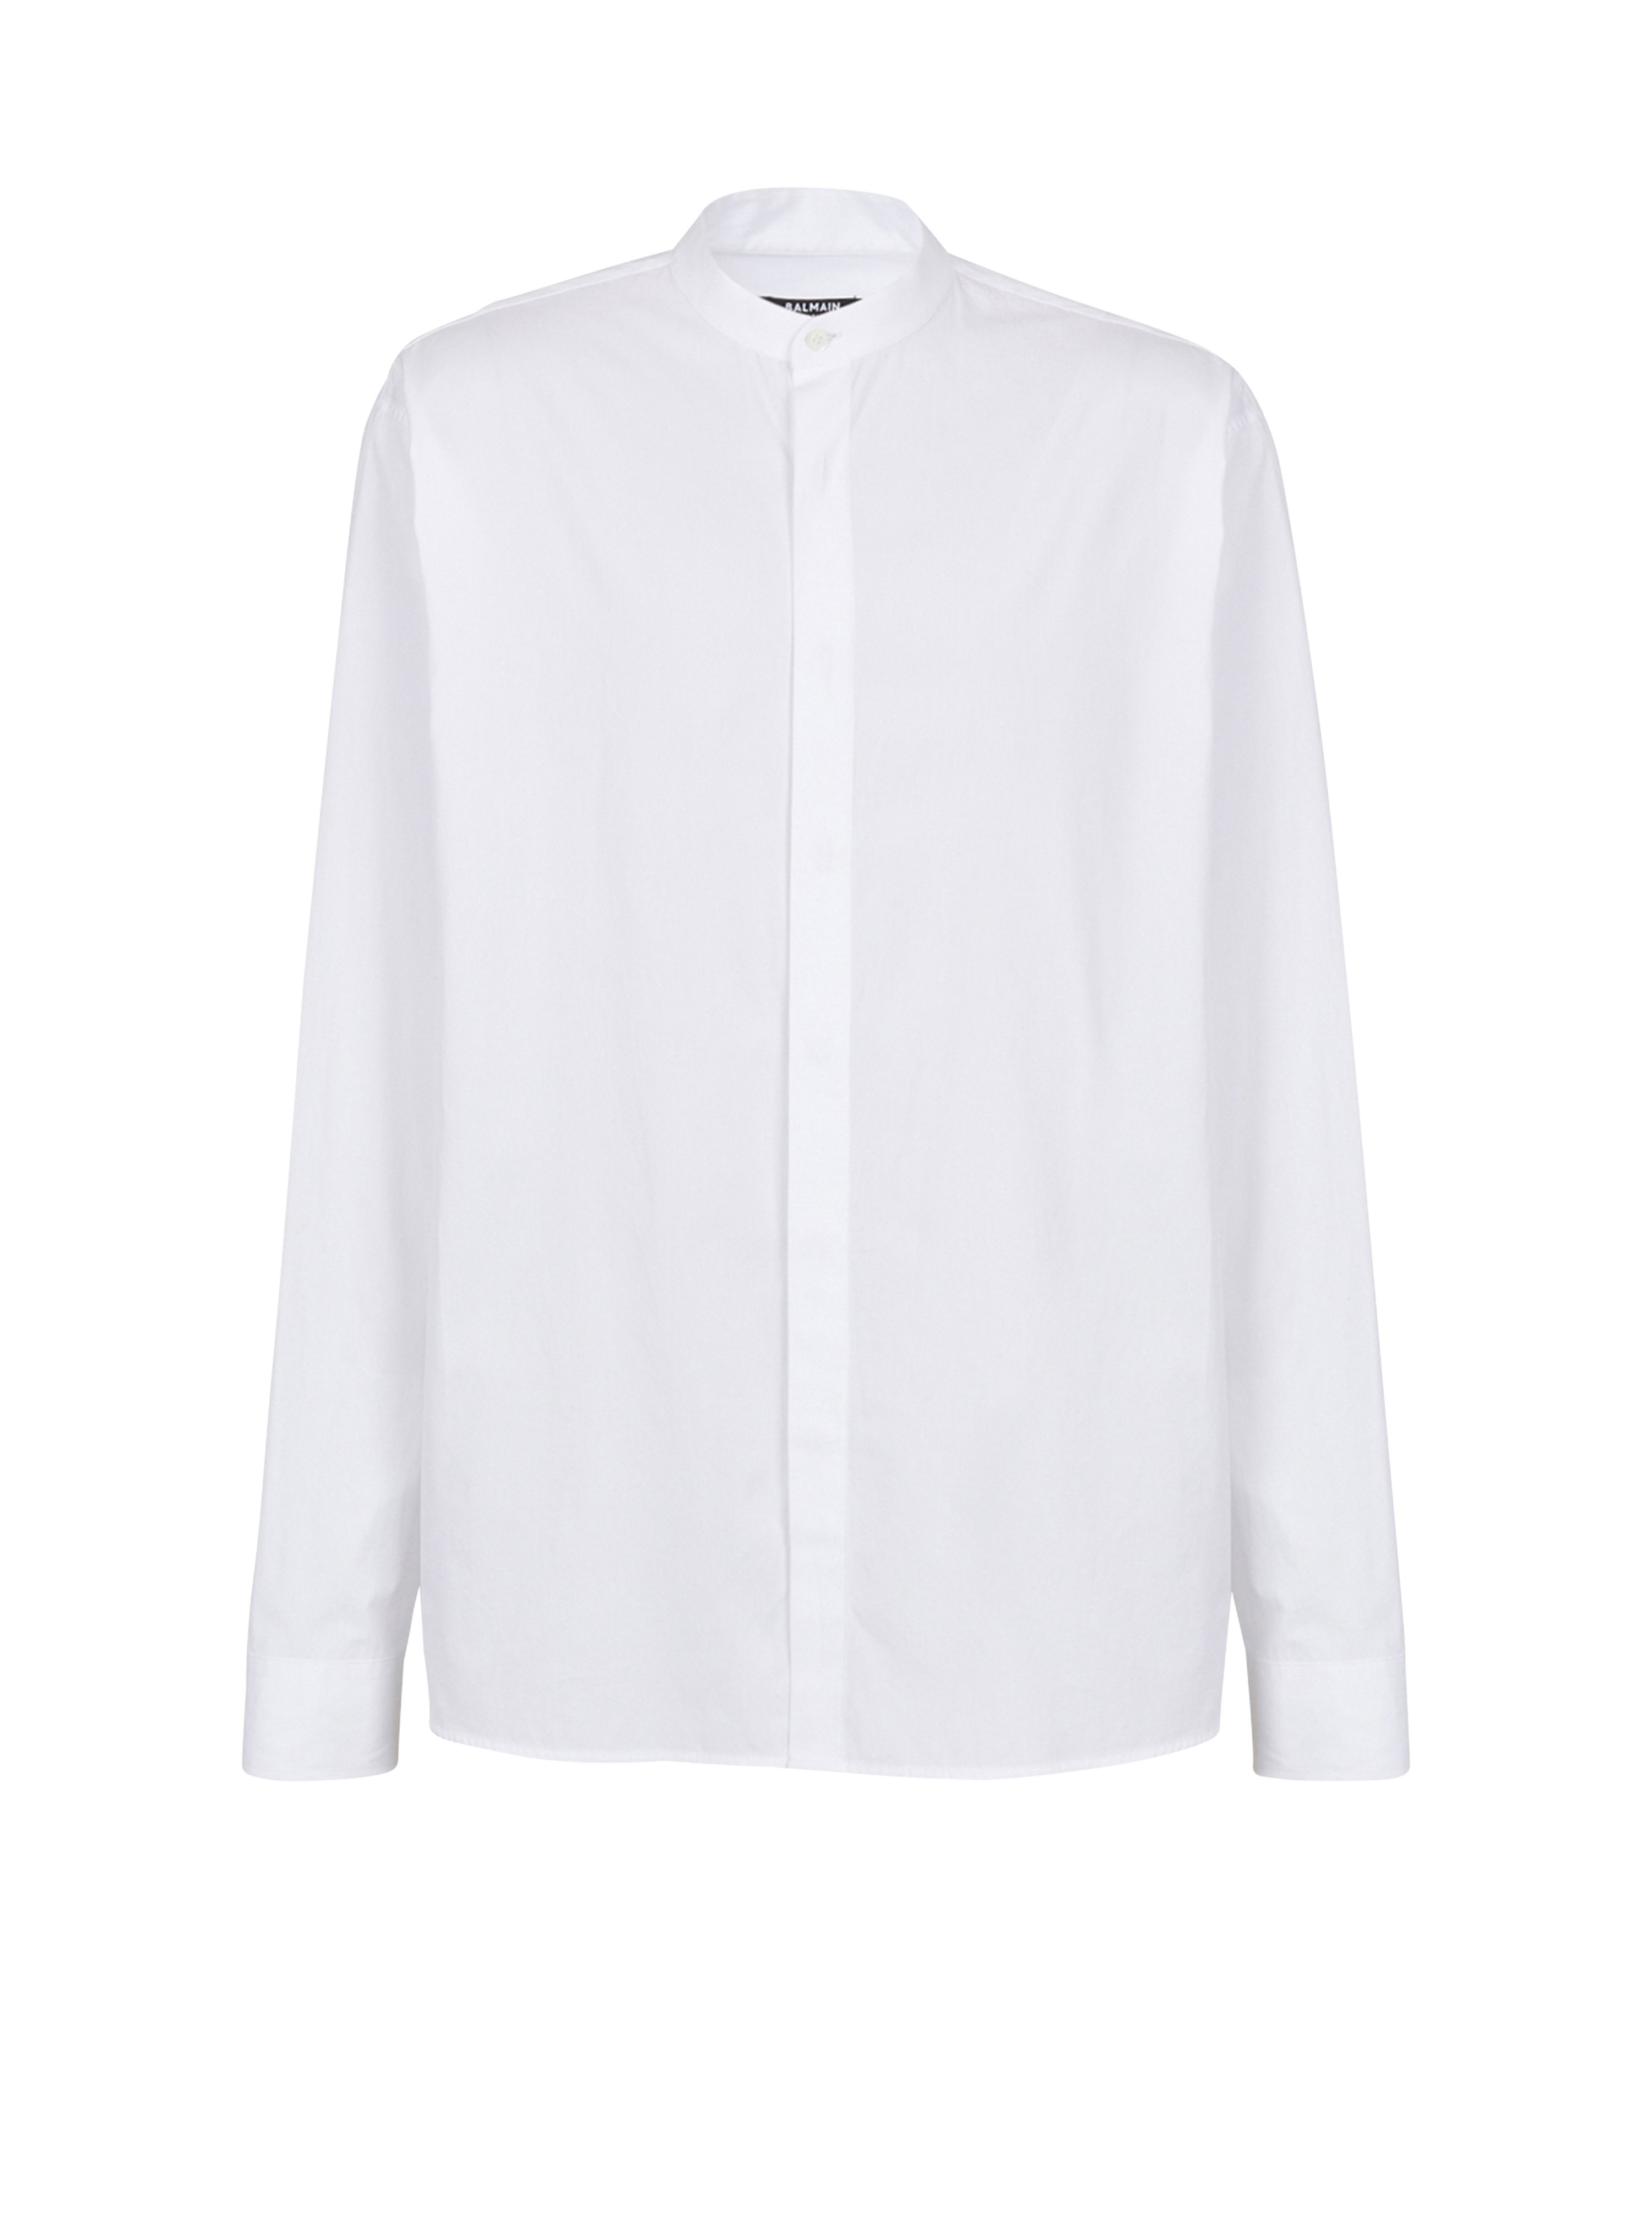 Cotton shirt, white